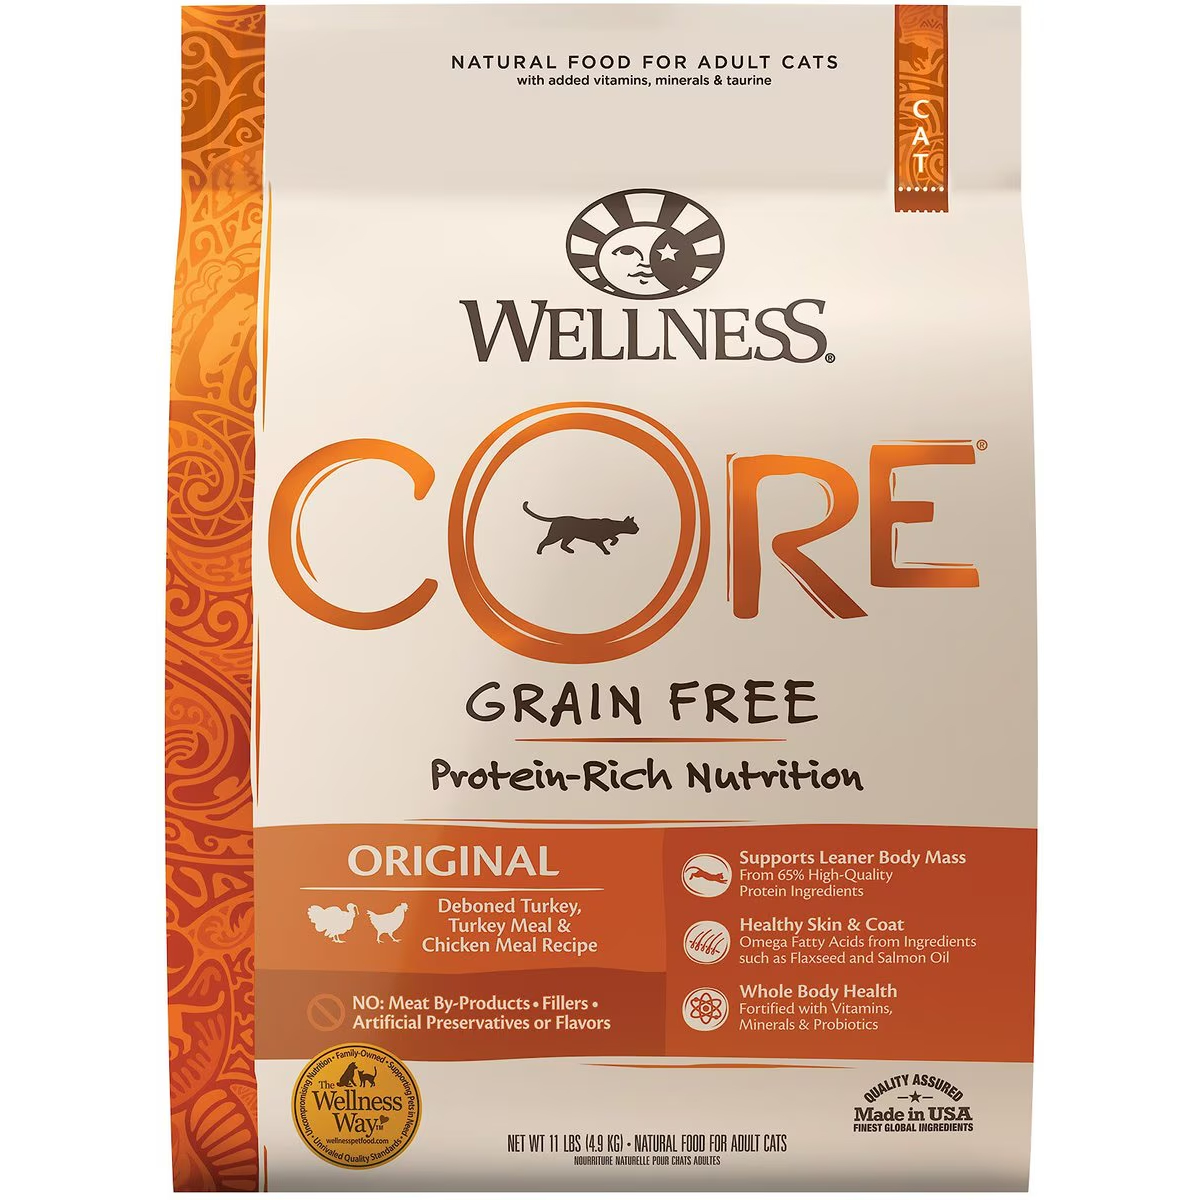 Wellness Core Grain-Free Original Formula Cat Food